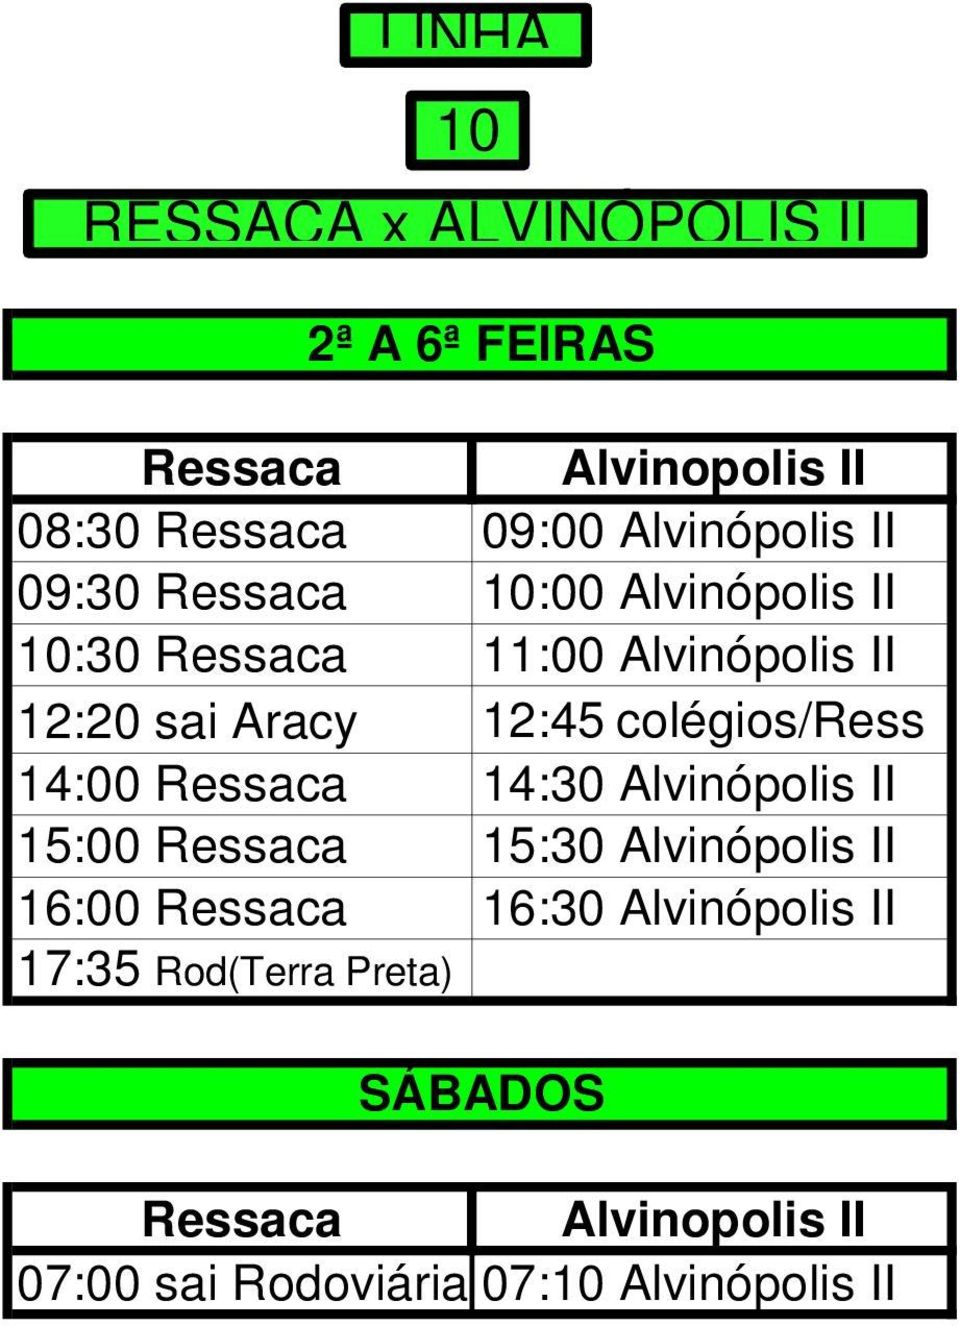 colégios/ress 14:00 Ressaca 14:30 Alvinópolis II 15:00 Ressaca 15:30 Alvinópolis II 16:00 Ressaca